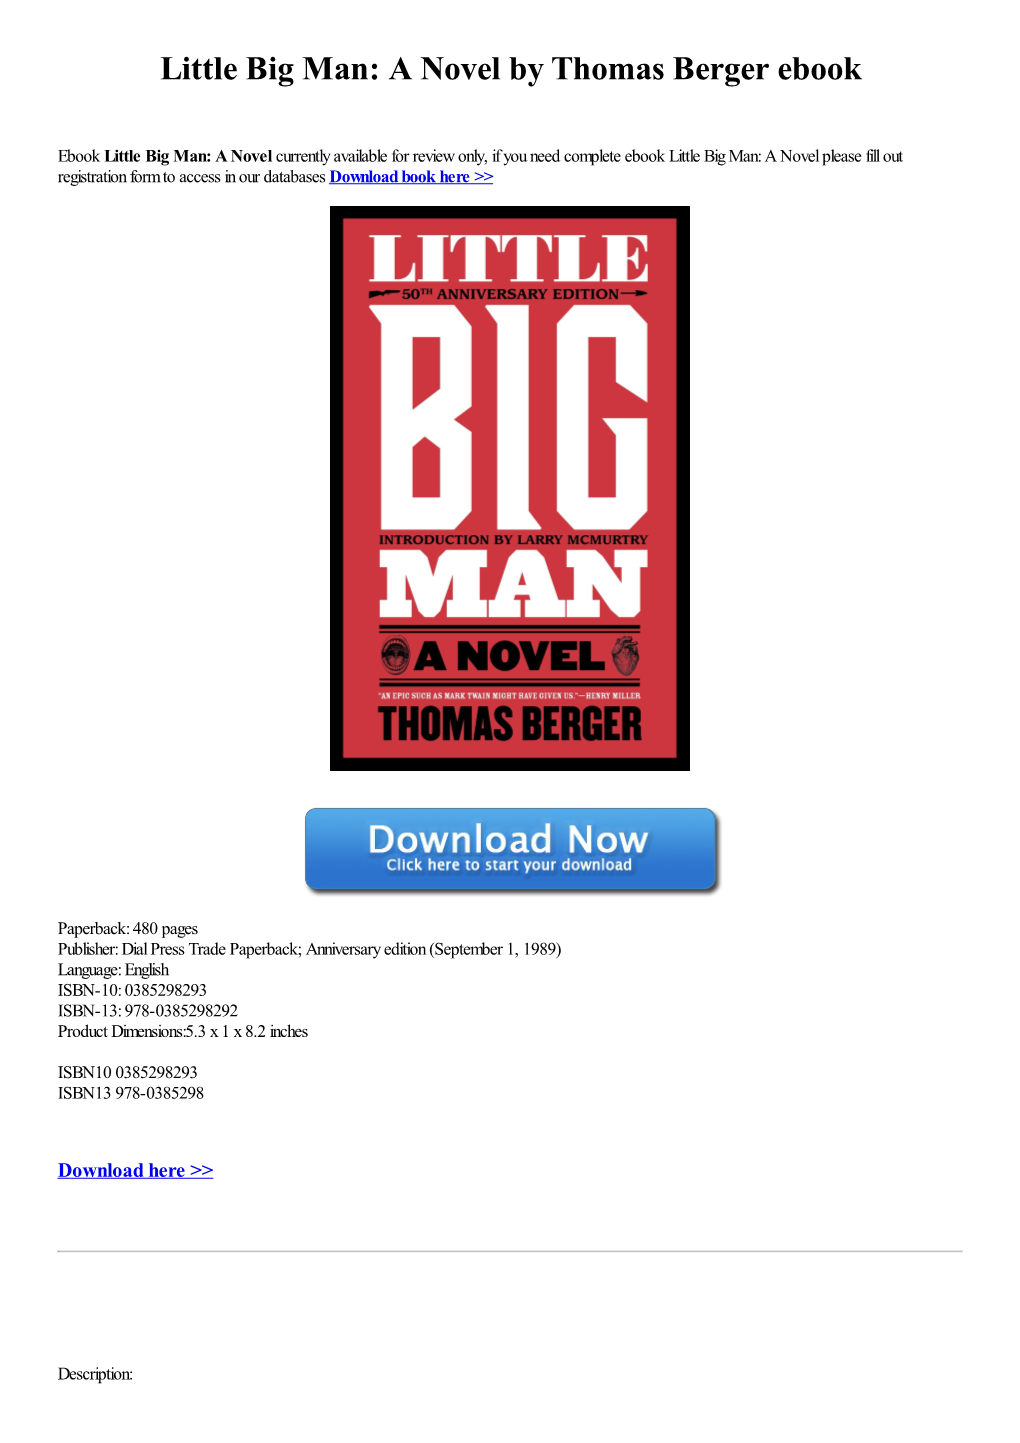 Download Ebook Little Big Man: a Novel by Thomas Berger Book